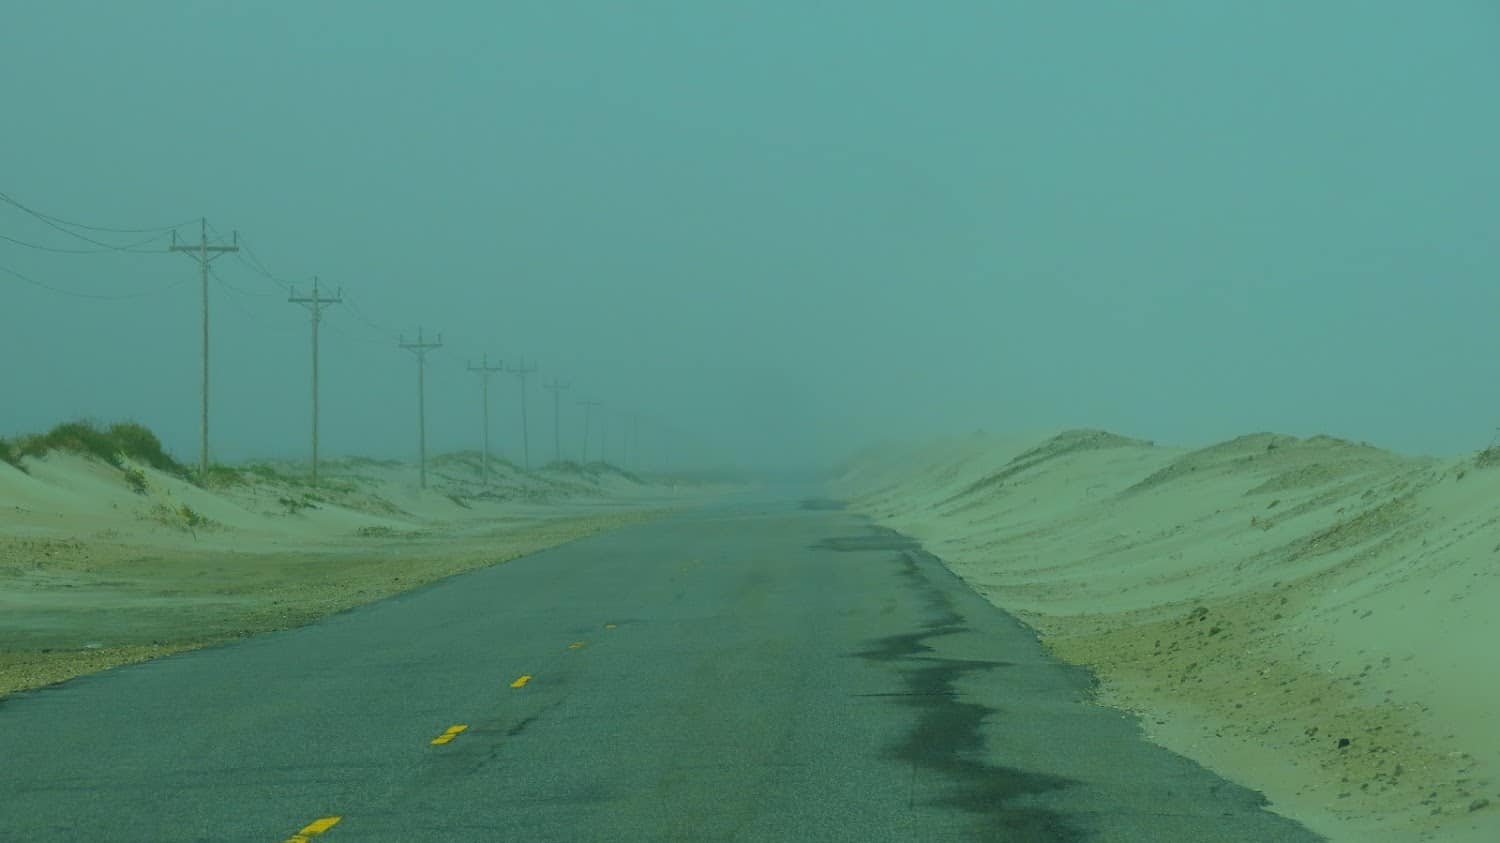 desolate road encroaching beach